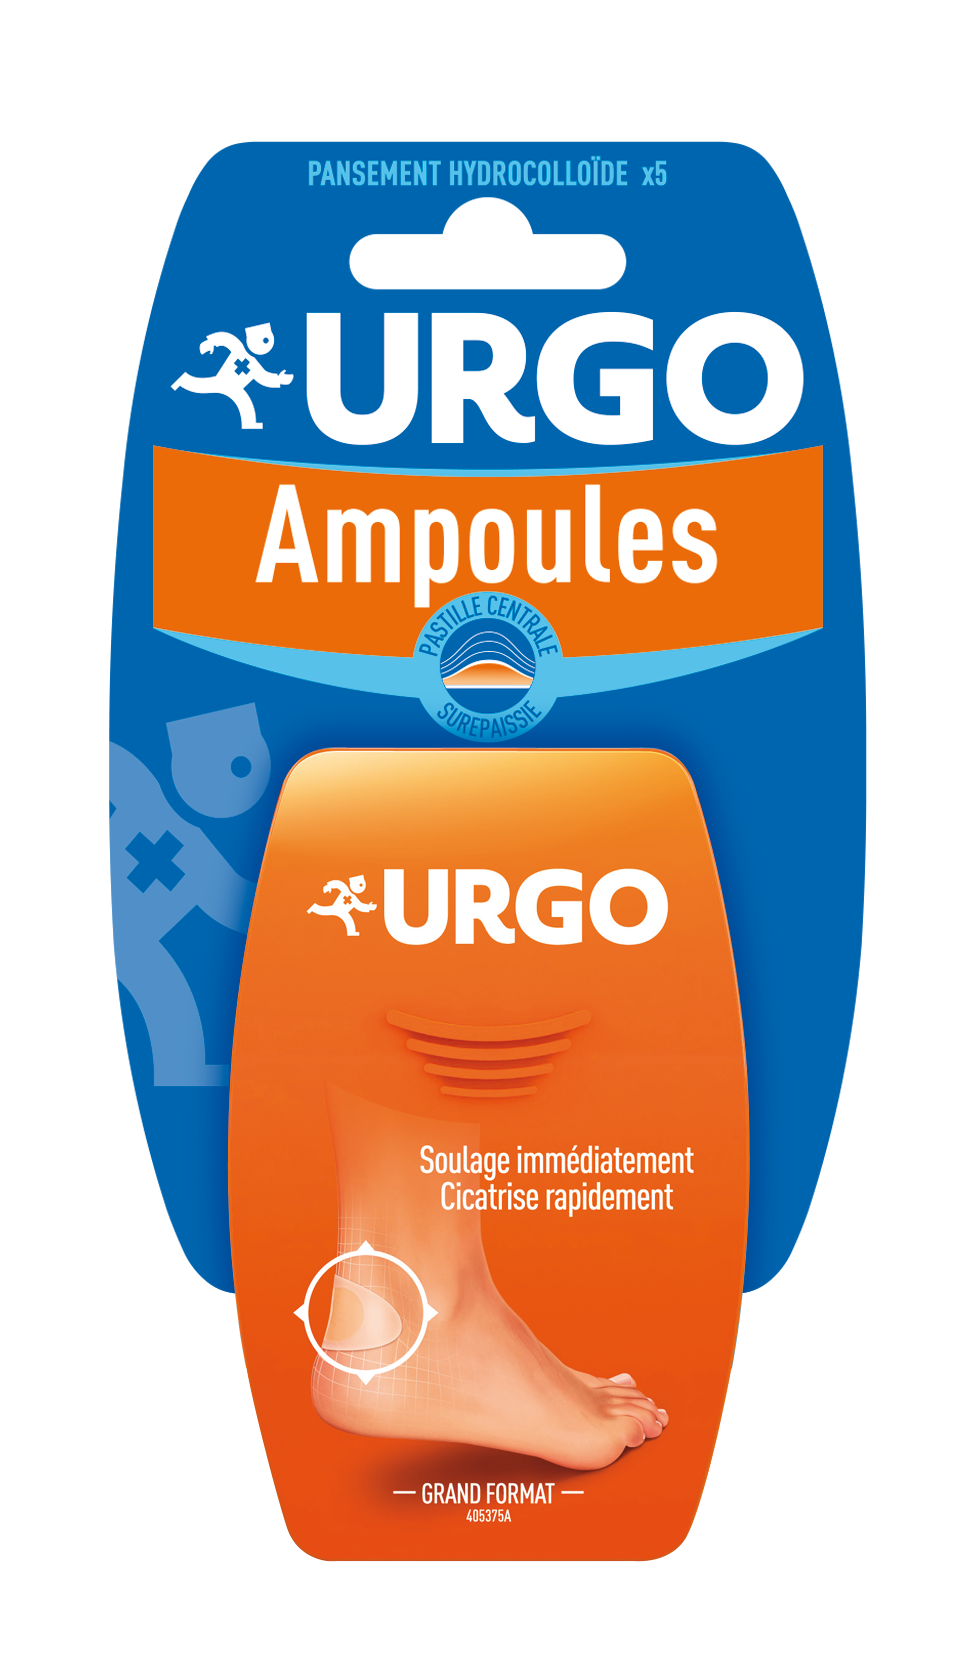 130215-Urgo-Ampoules-Pied